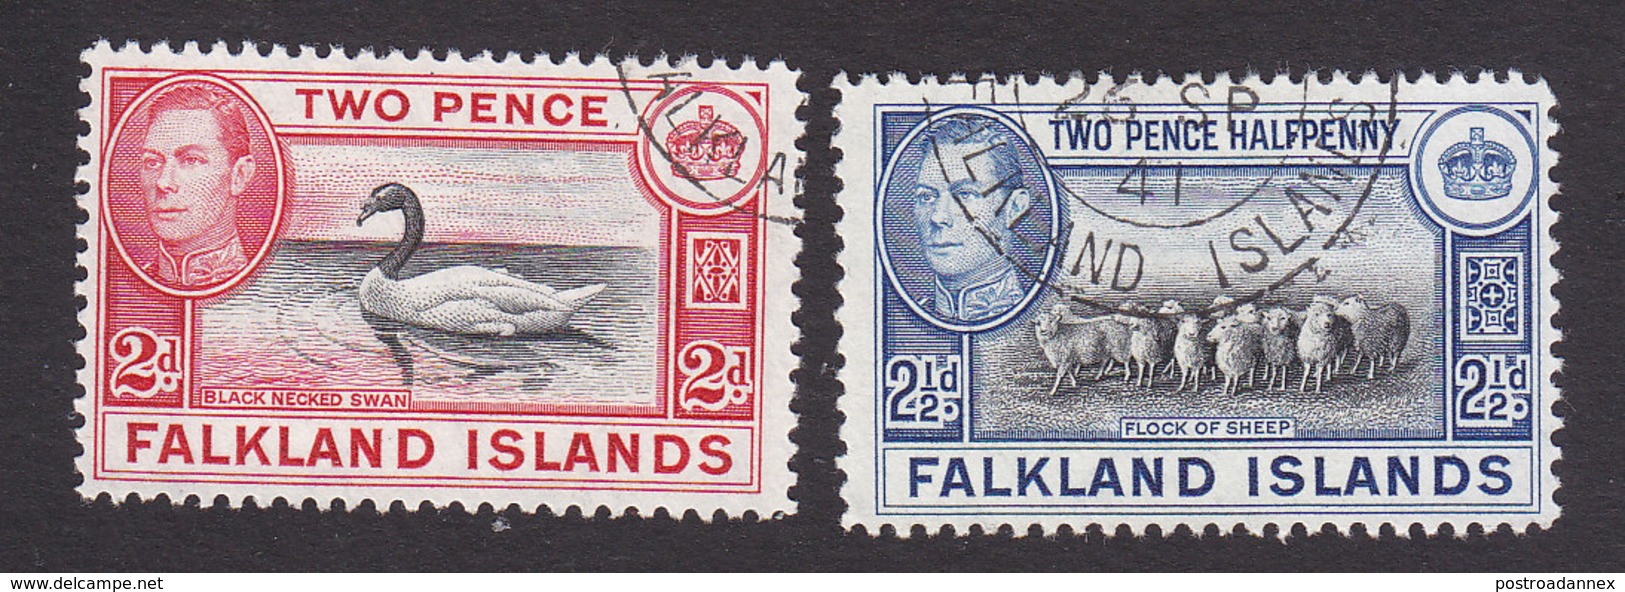 Falkland Islands, Scott #86A, 87, Used, George VI And Scenes Of Falkland Islands, Issued 1938 - Falkland Islands